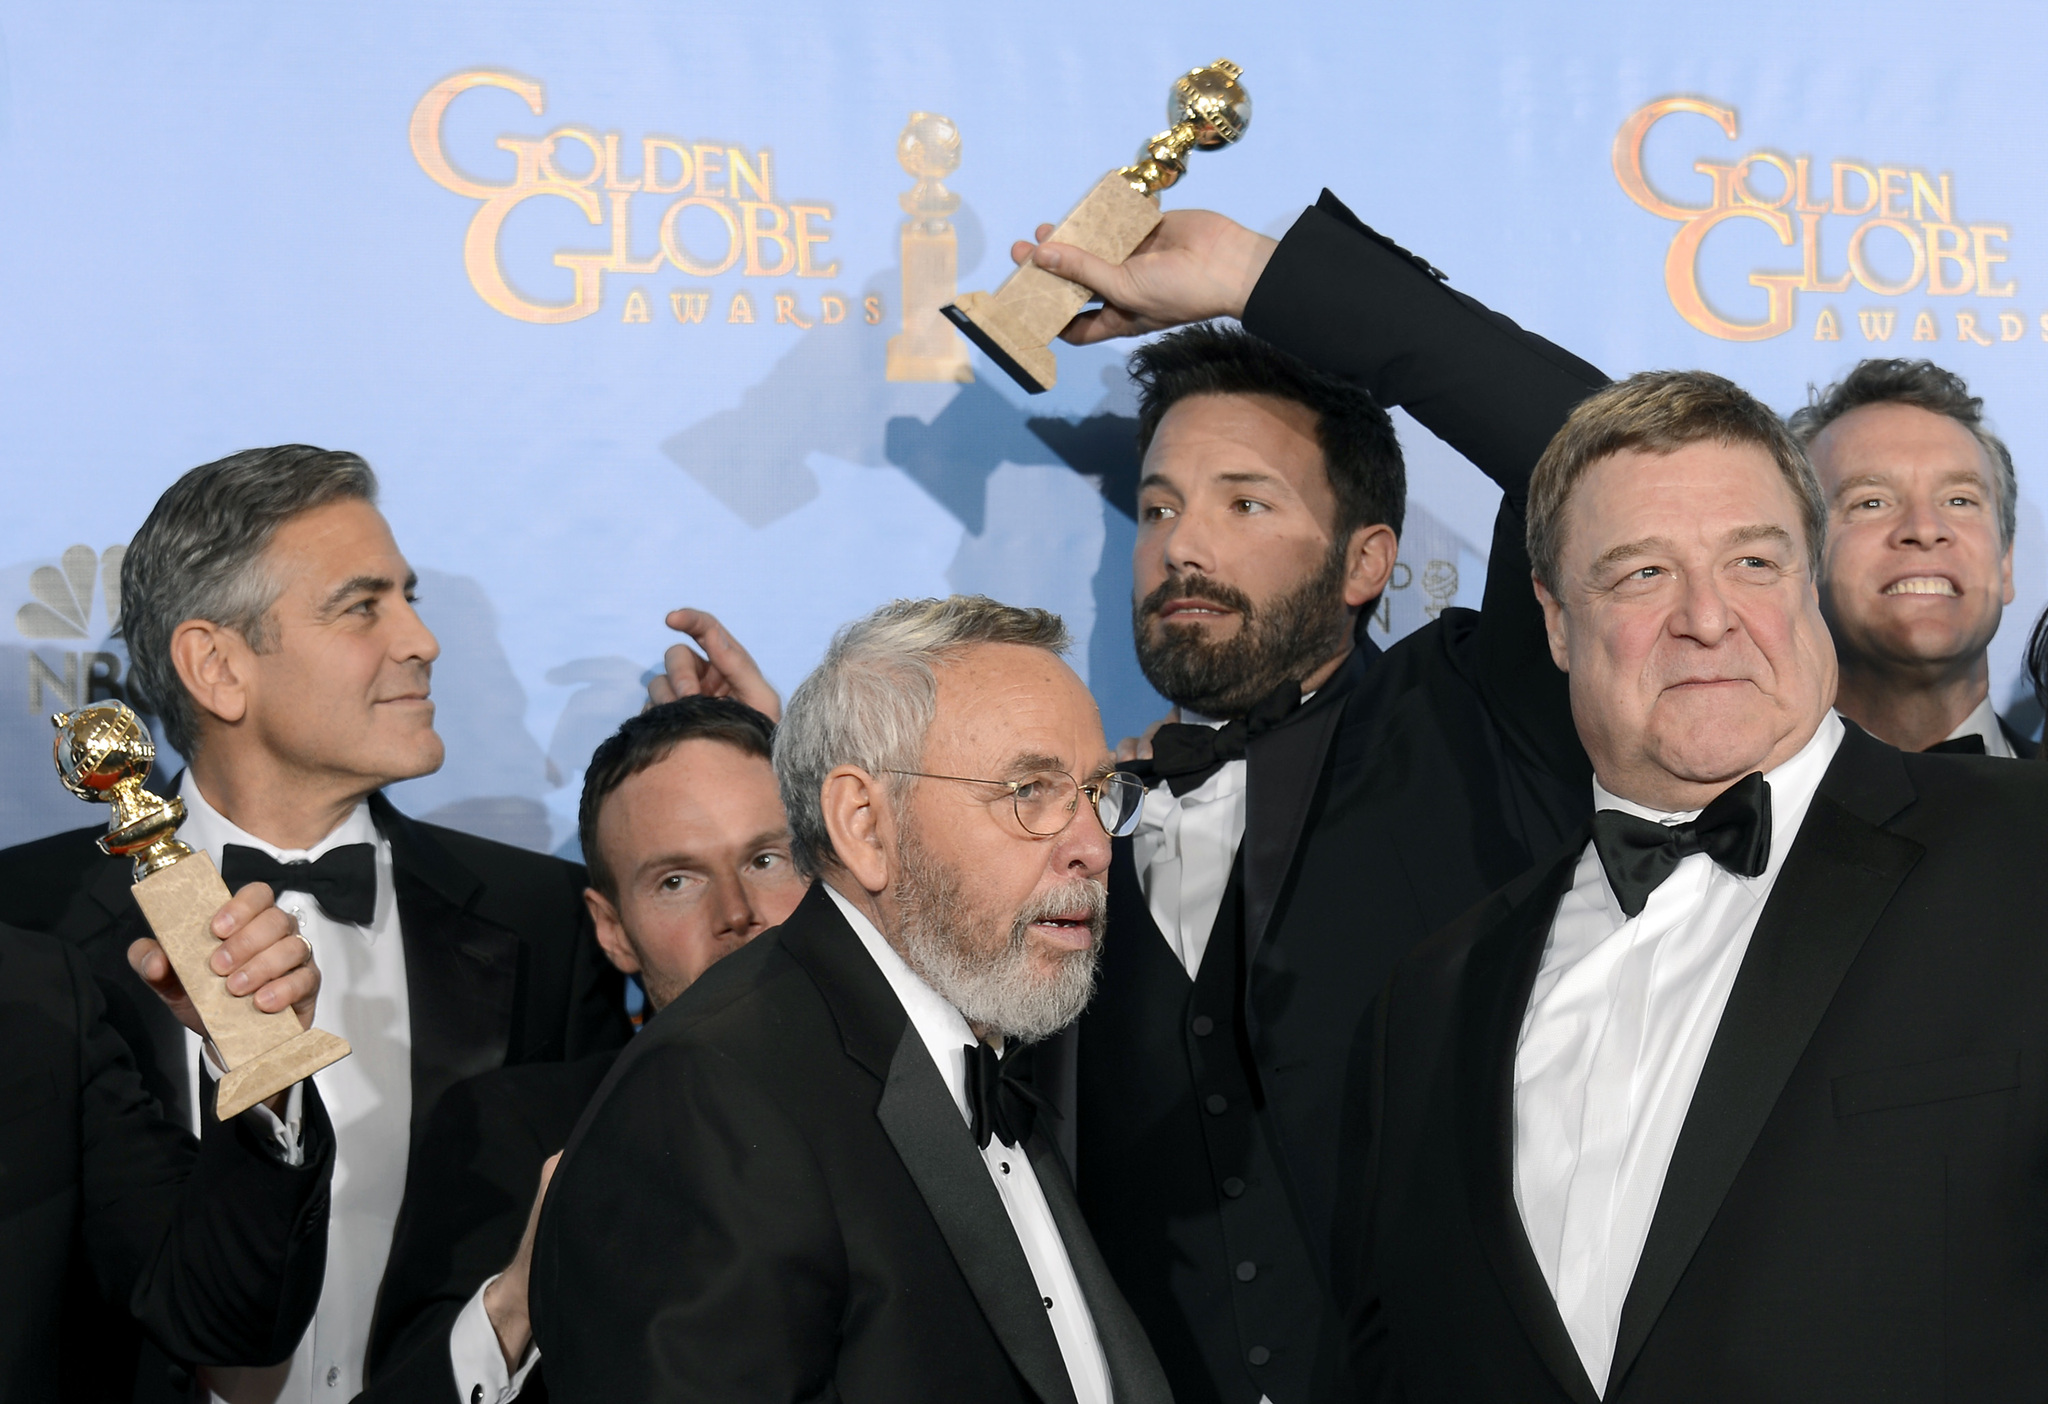 George Clooney, Ben Affleck, John Goodman, Grant Heslov and Tony Mendez